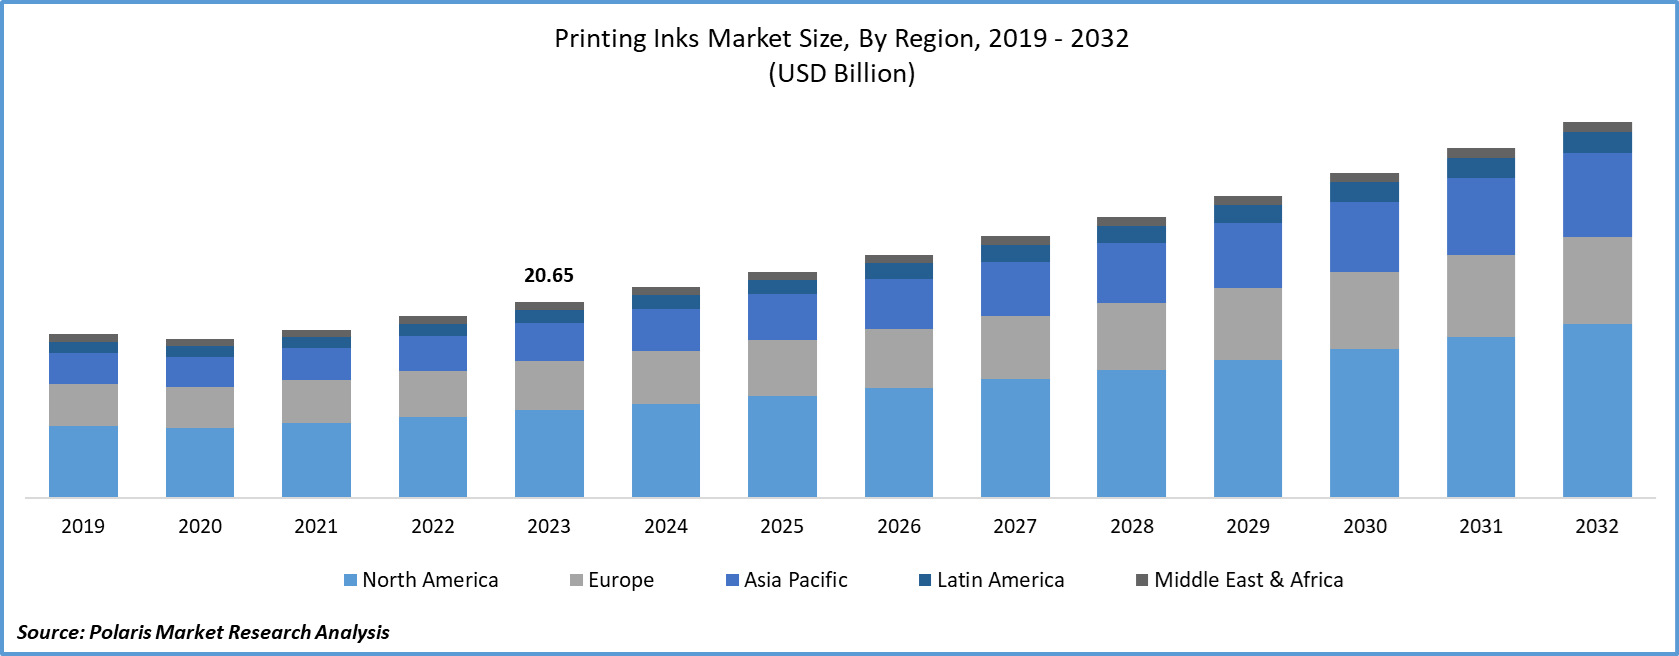 Printing Inks Market Size